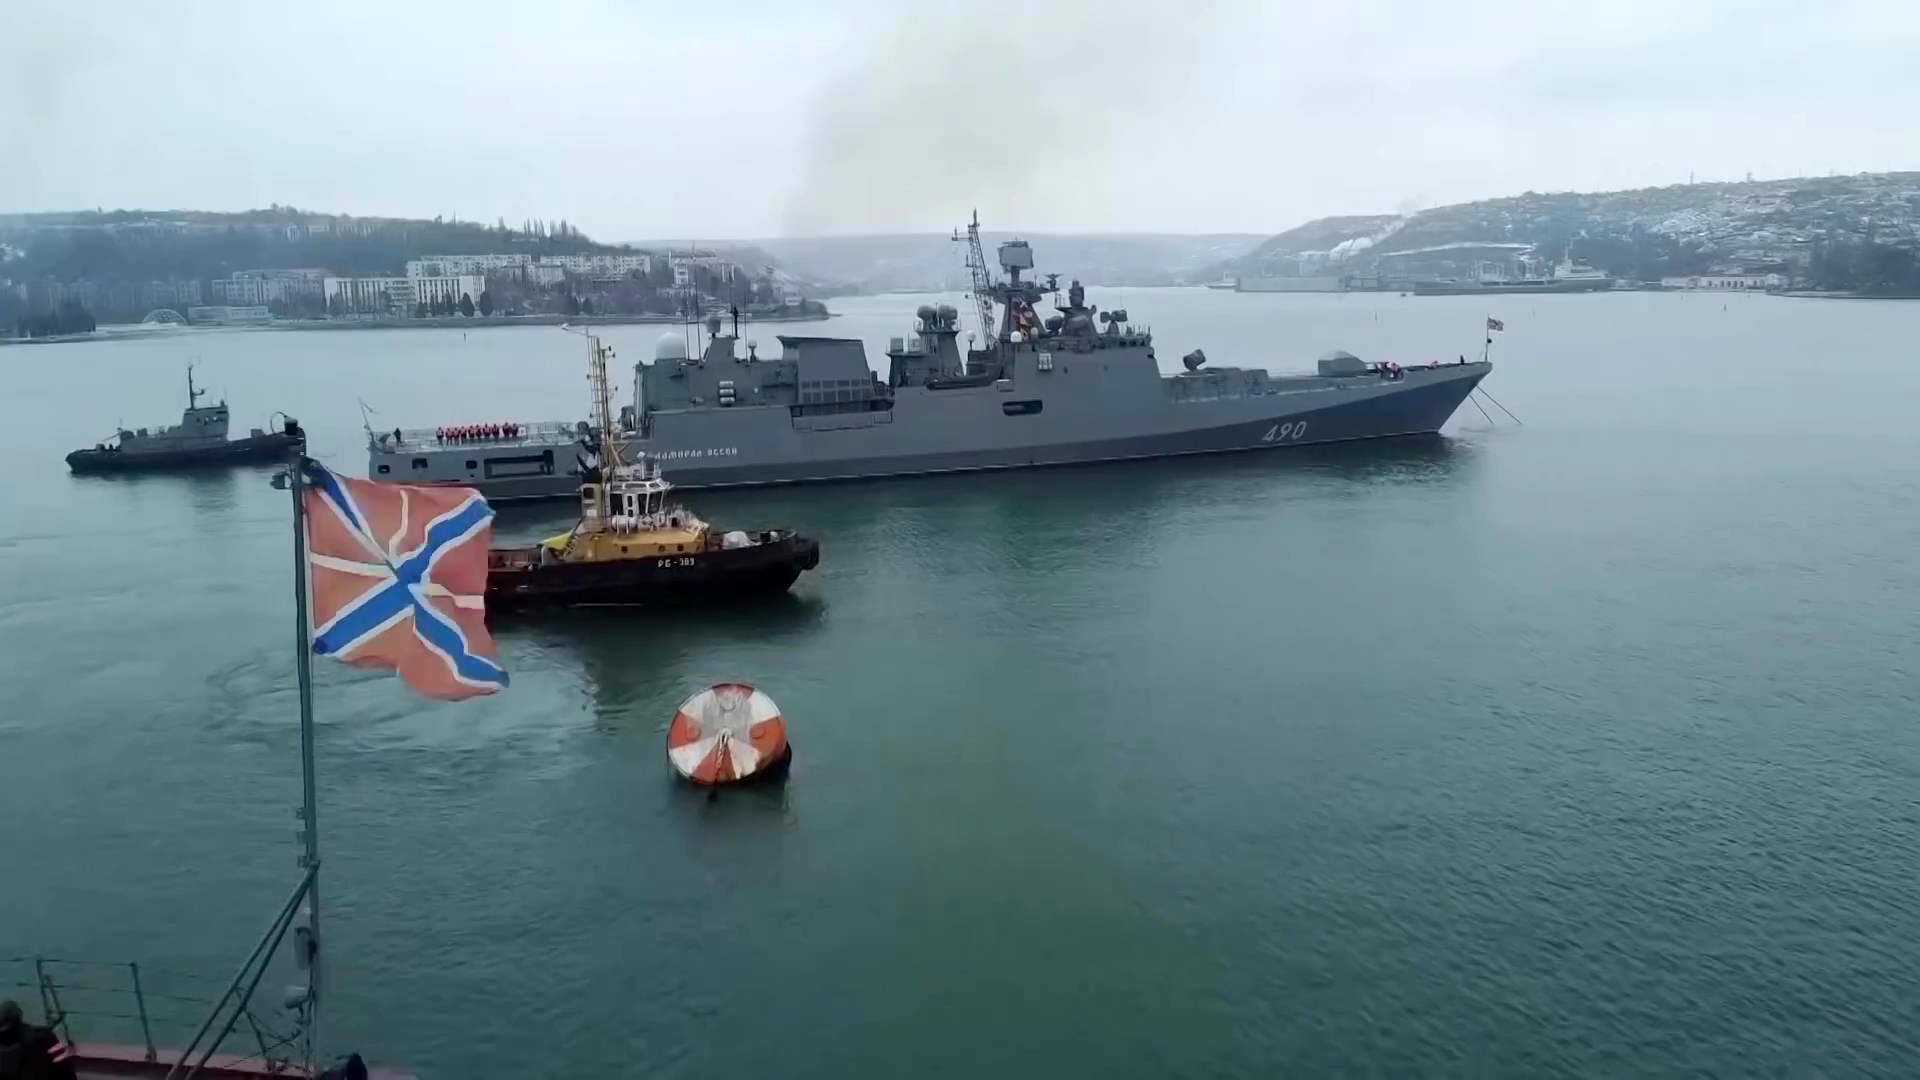 Ukrainian Coast Guard: Russia confirms it will not block Azov Sea traffic for exercises